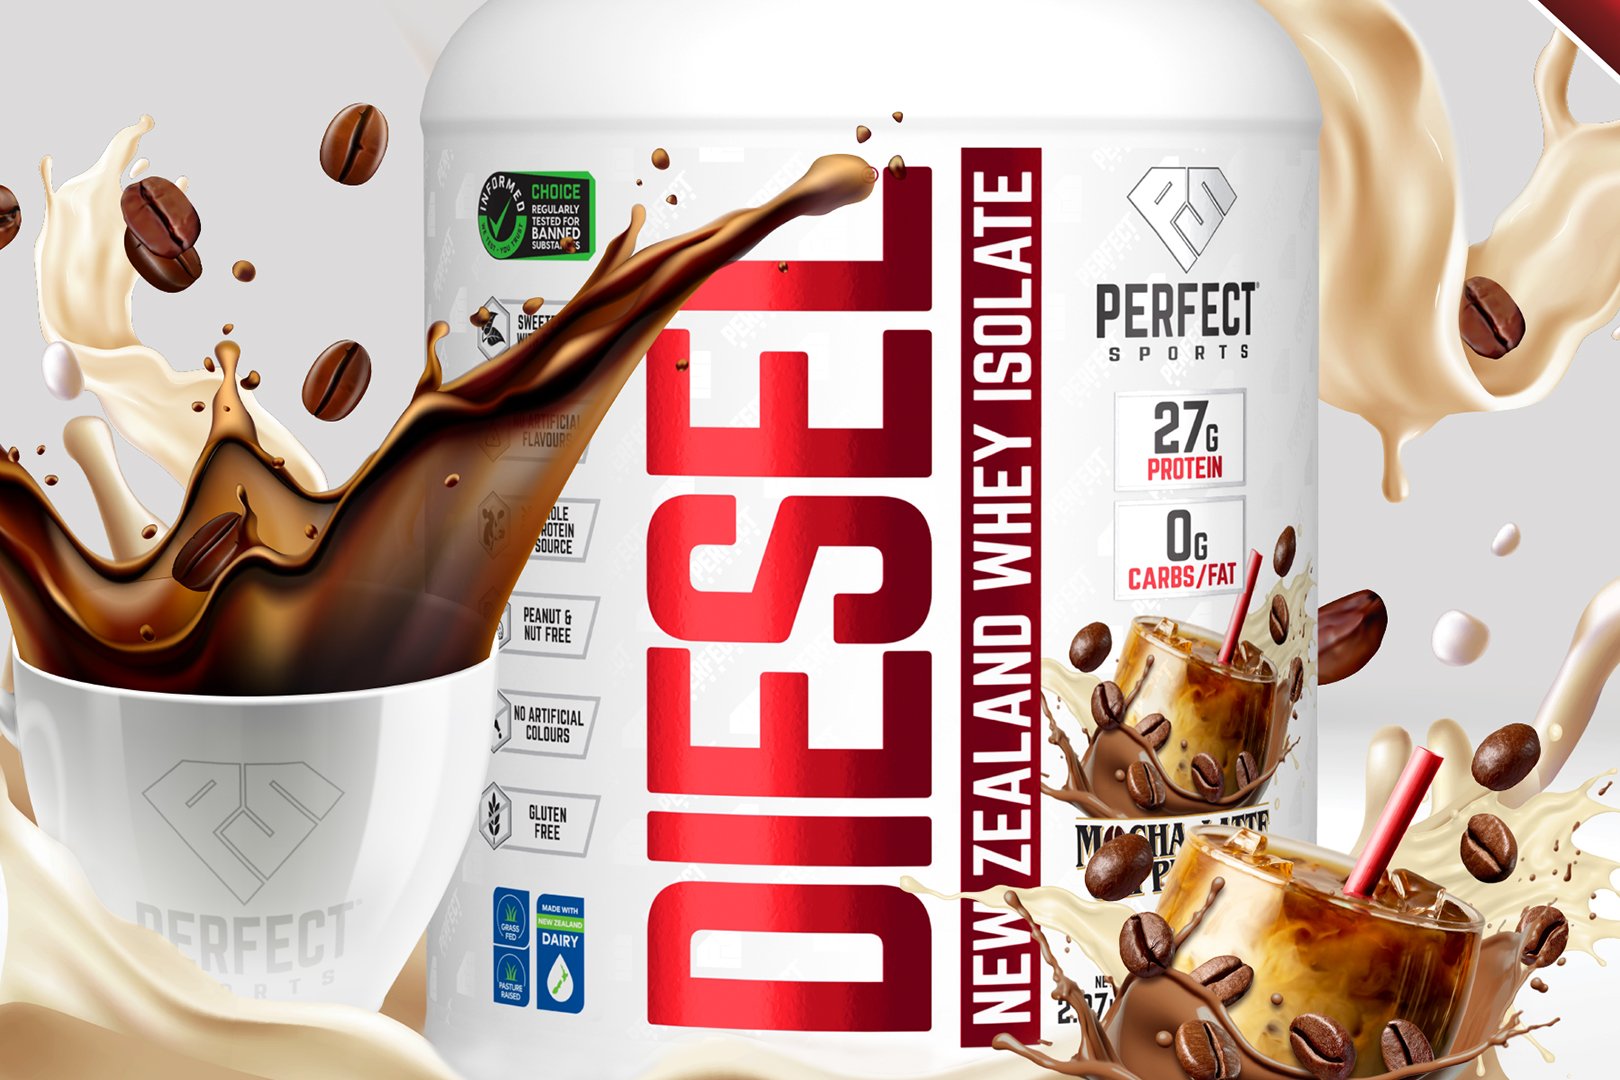 Perfect Sports Mocha Latte Diesel Protein Powder